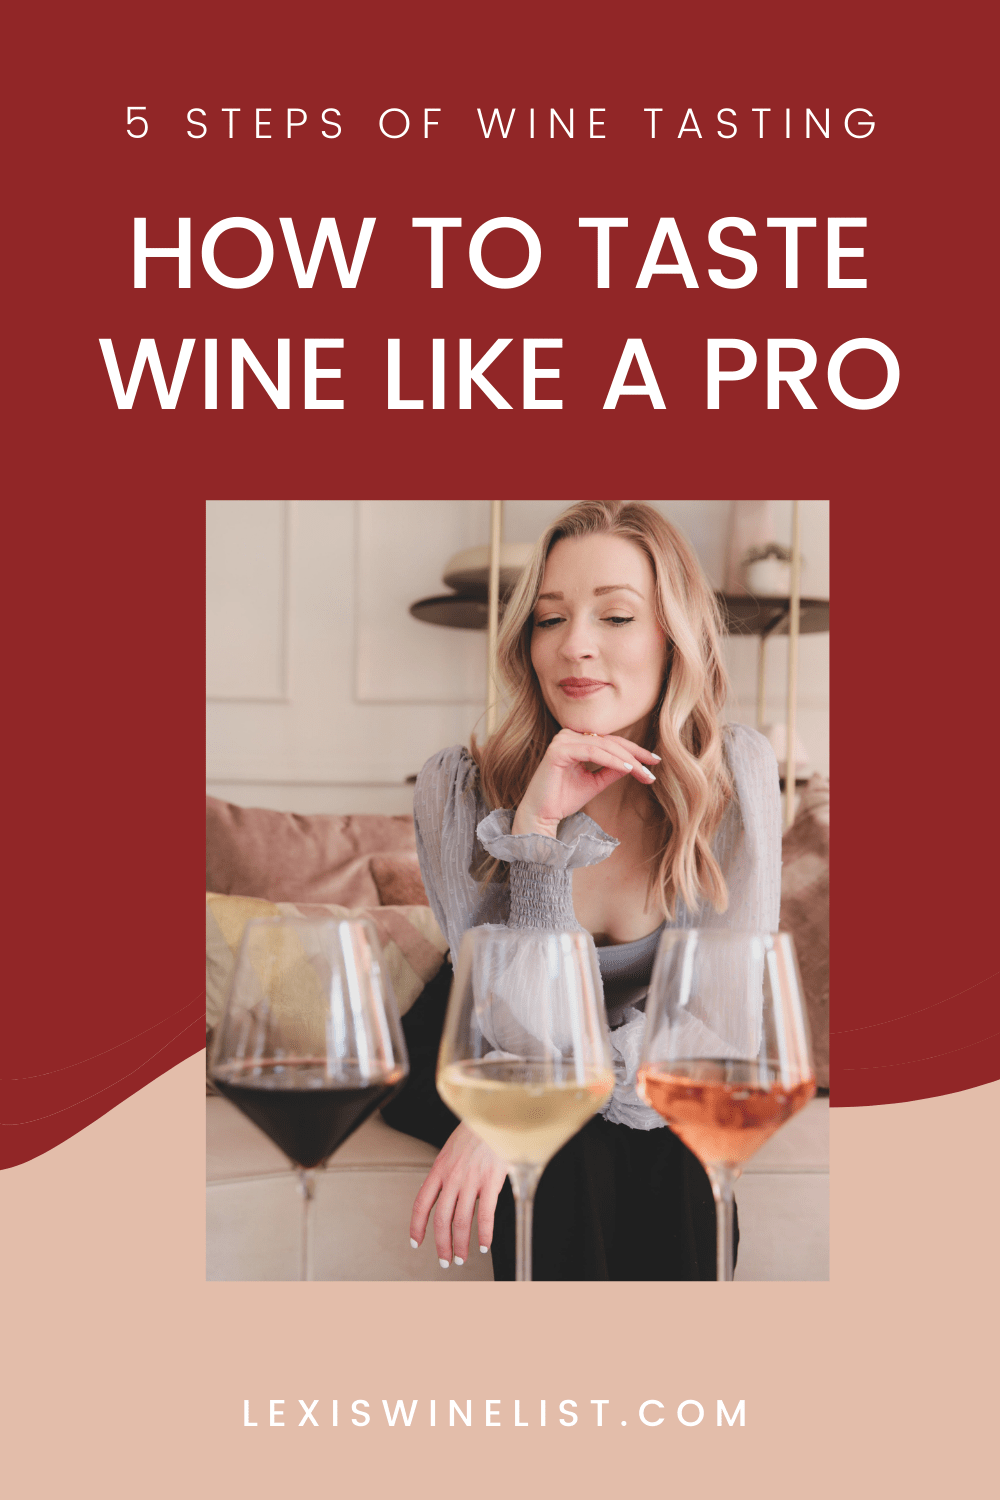 How to Wine Taste Like a Pro